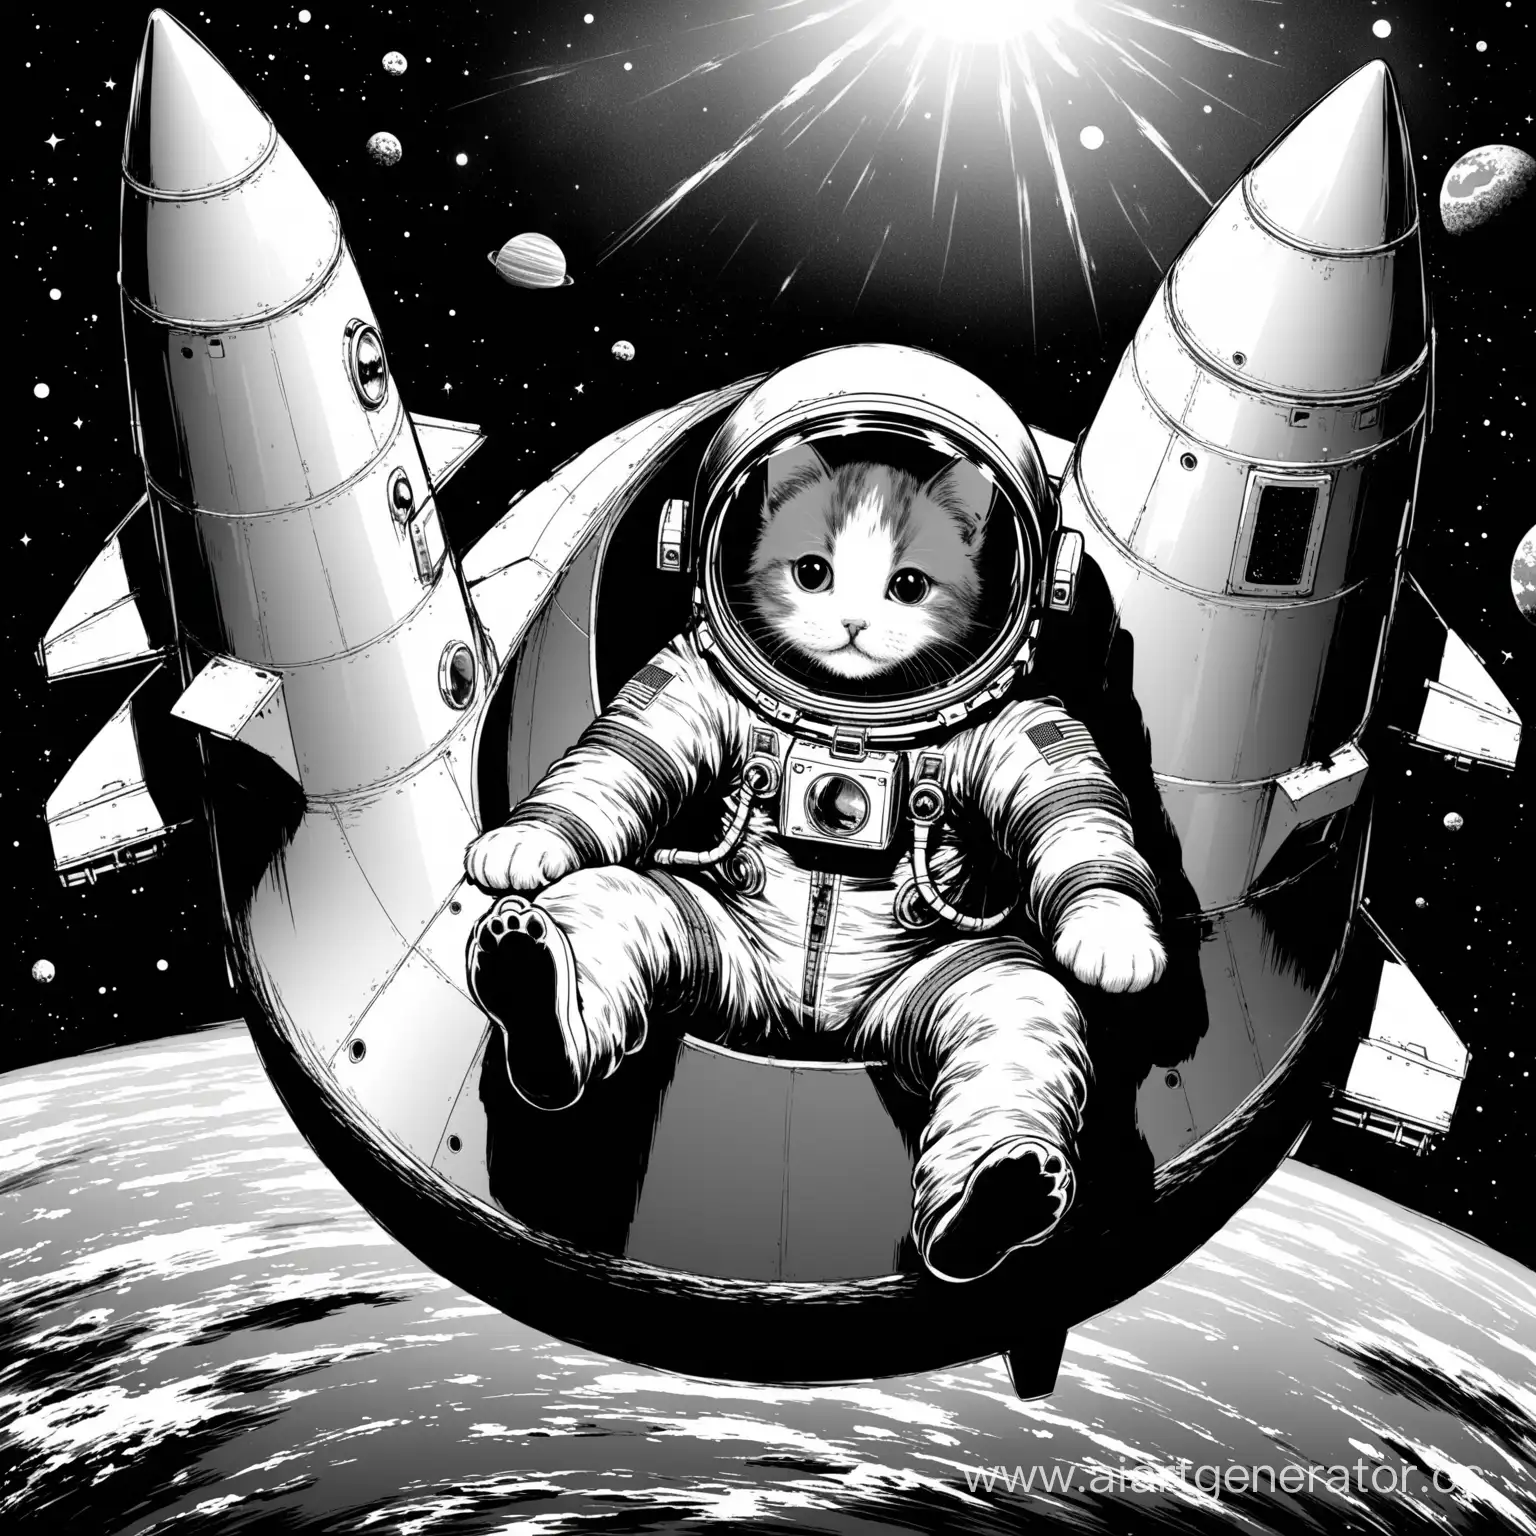 Monochrome-Space-Cat-Kitty-Astronaut-in-Rocket